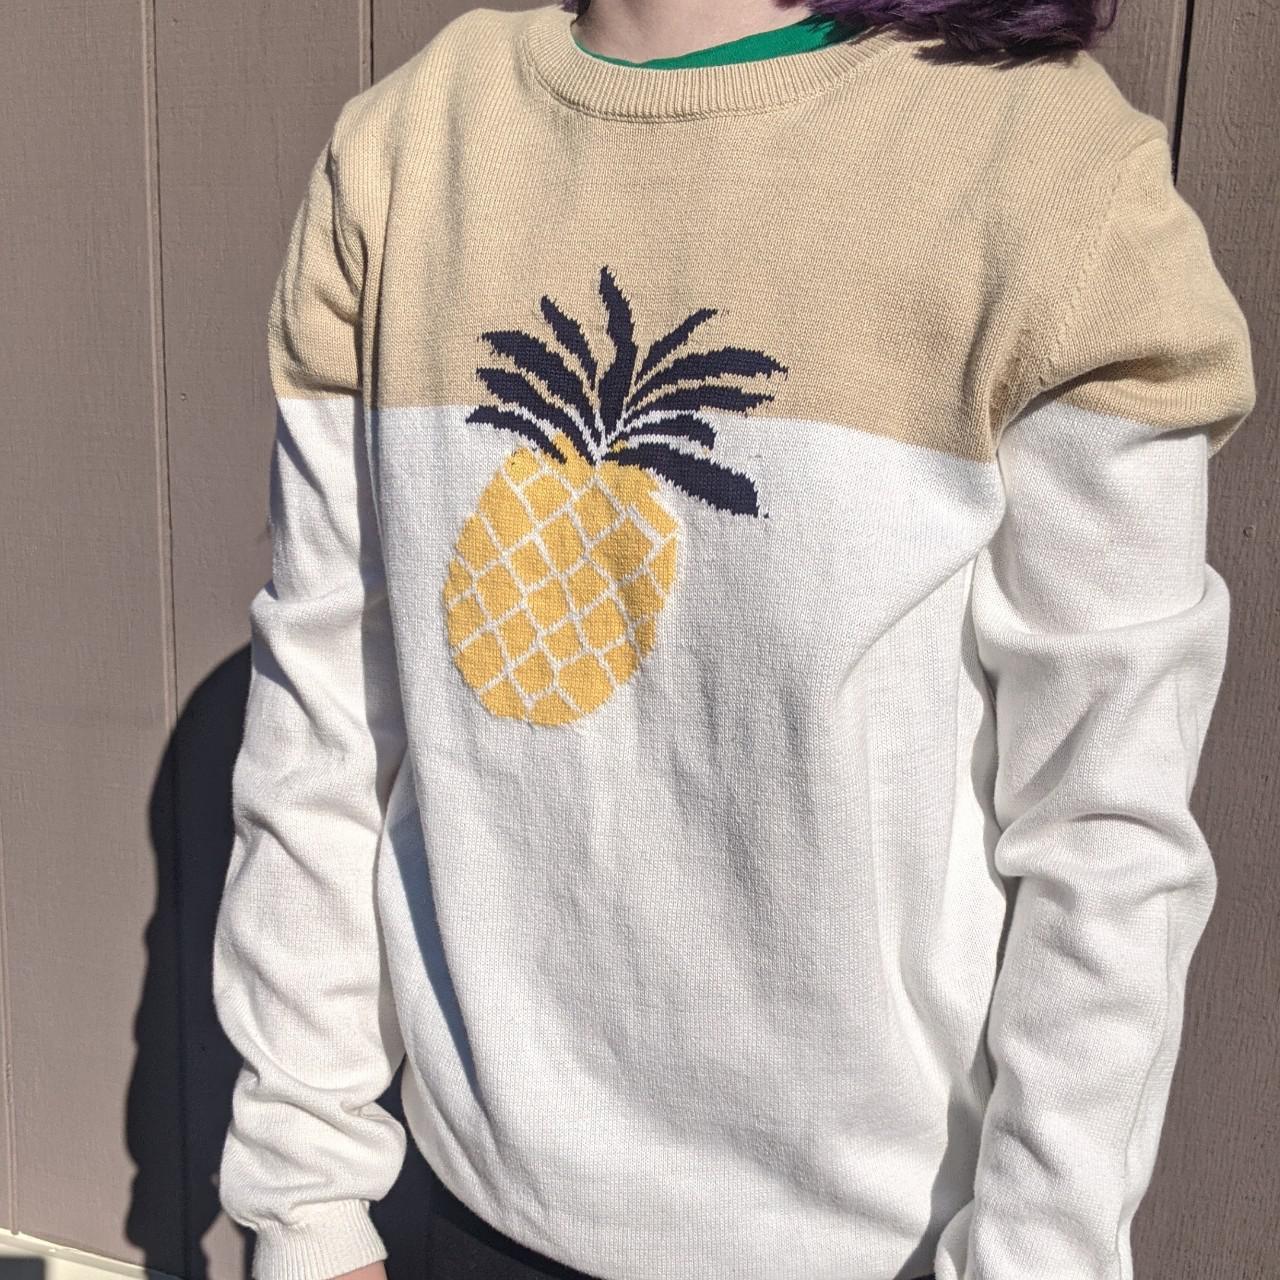 Product Image 1 - Izod pineapple sweater, vintage 90's